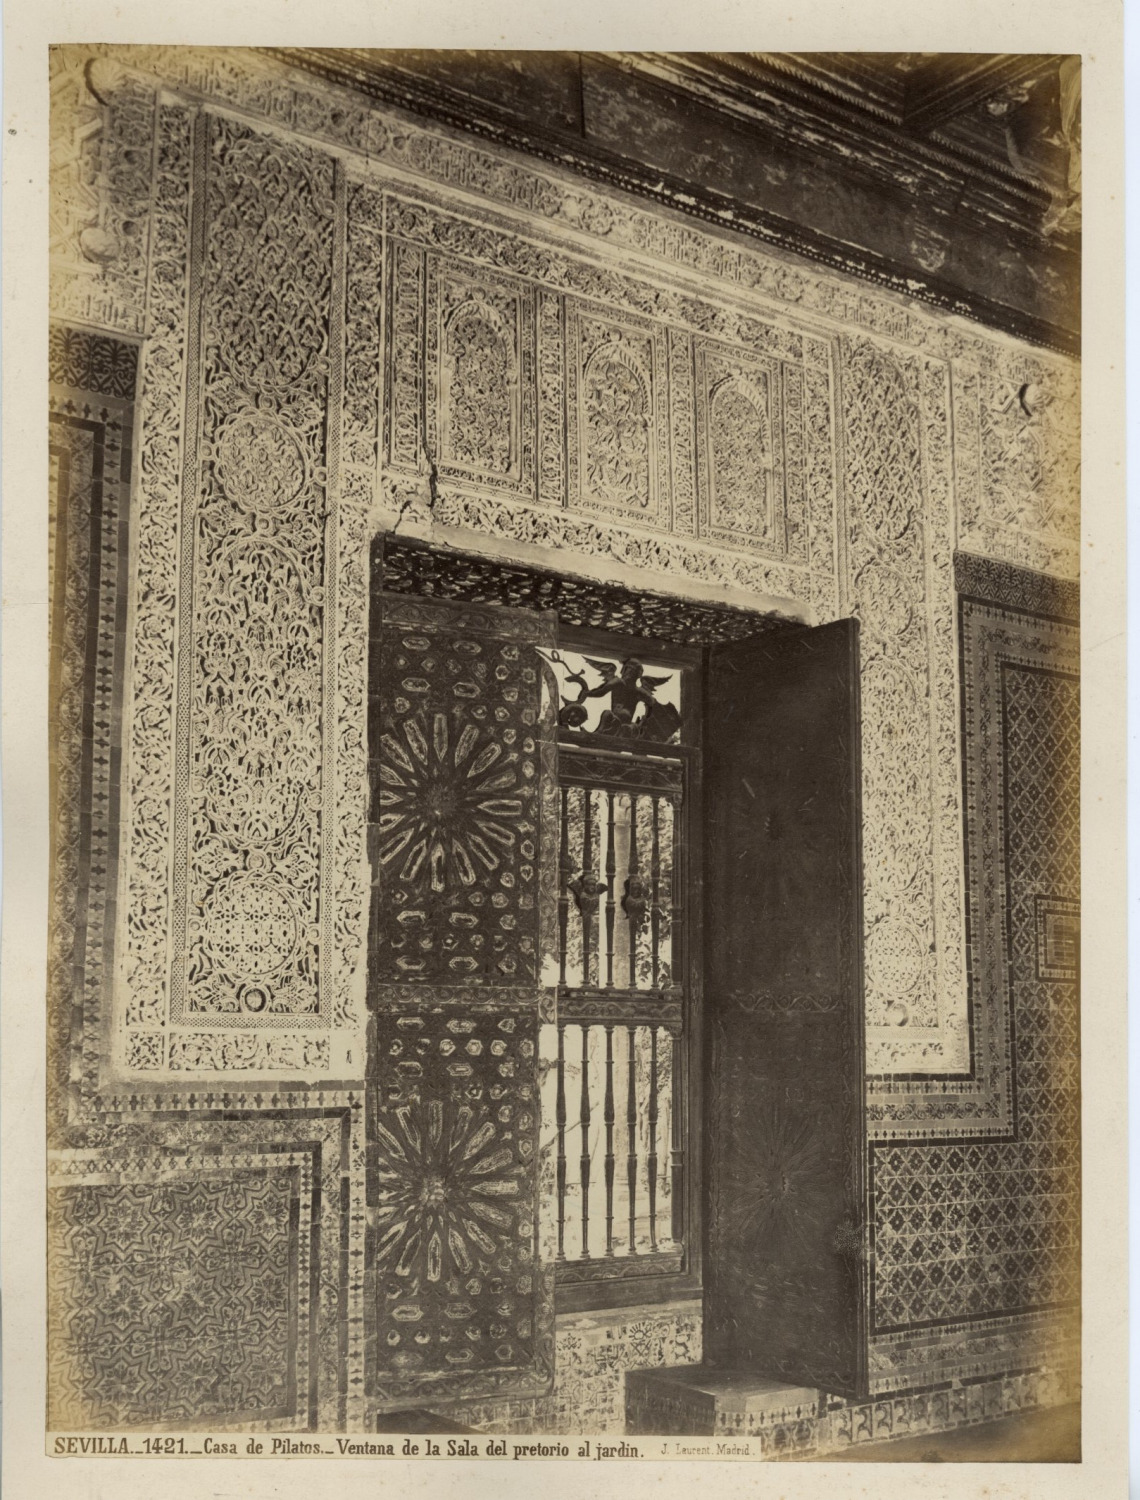 Laurent, Spain, Seville, Casa de Pilatos, Window of the Sala del praetorio al j